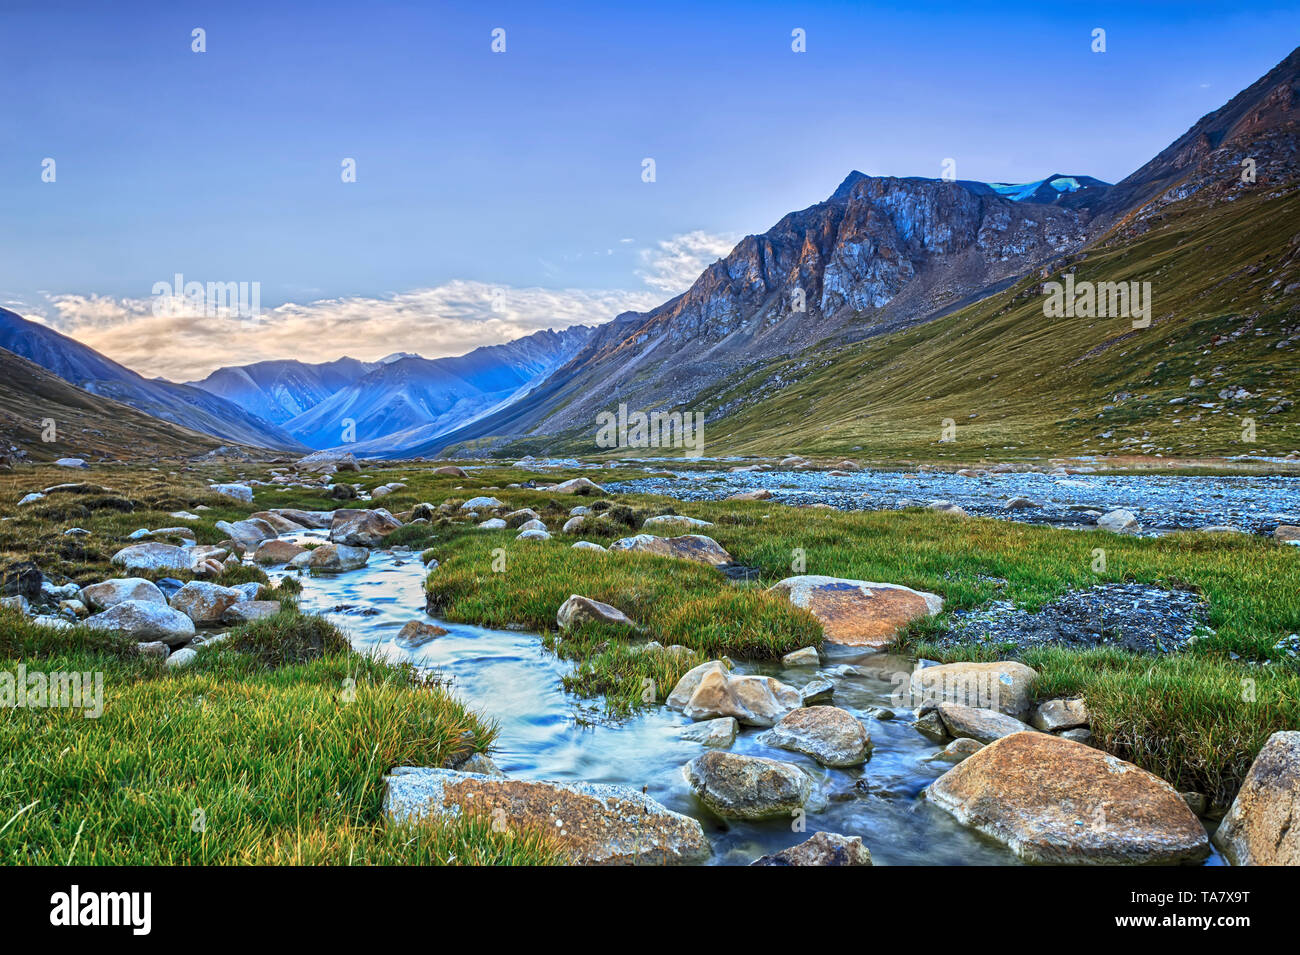 Mountain landscapes of Kyrgyzstan. Burkan River Valley. Stock Photo